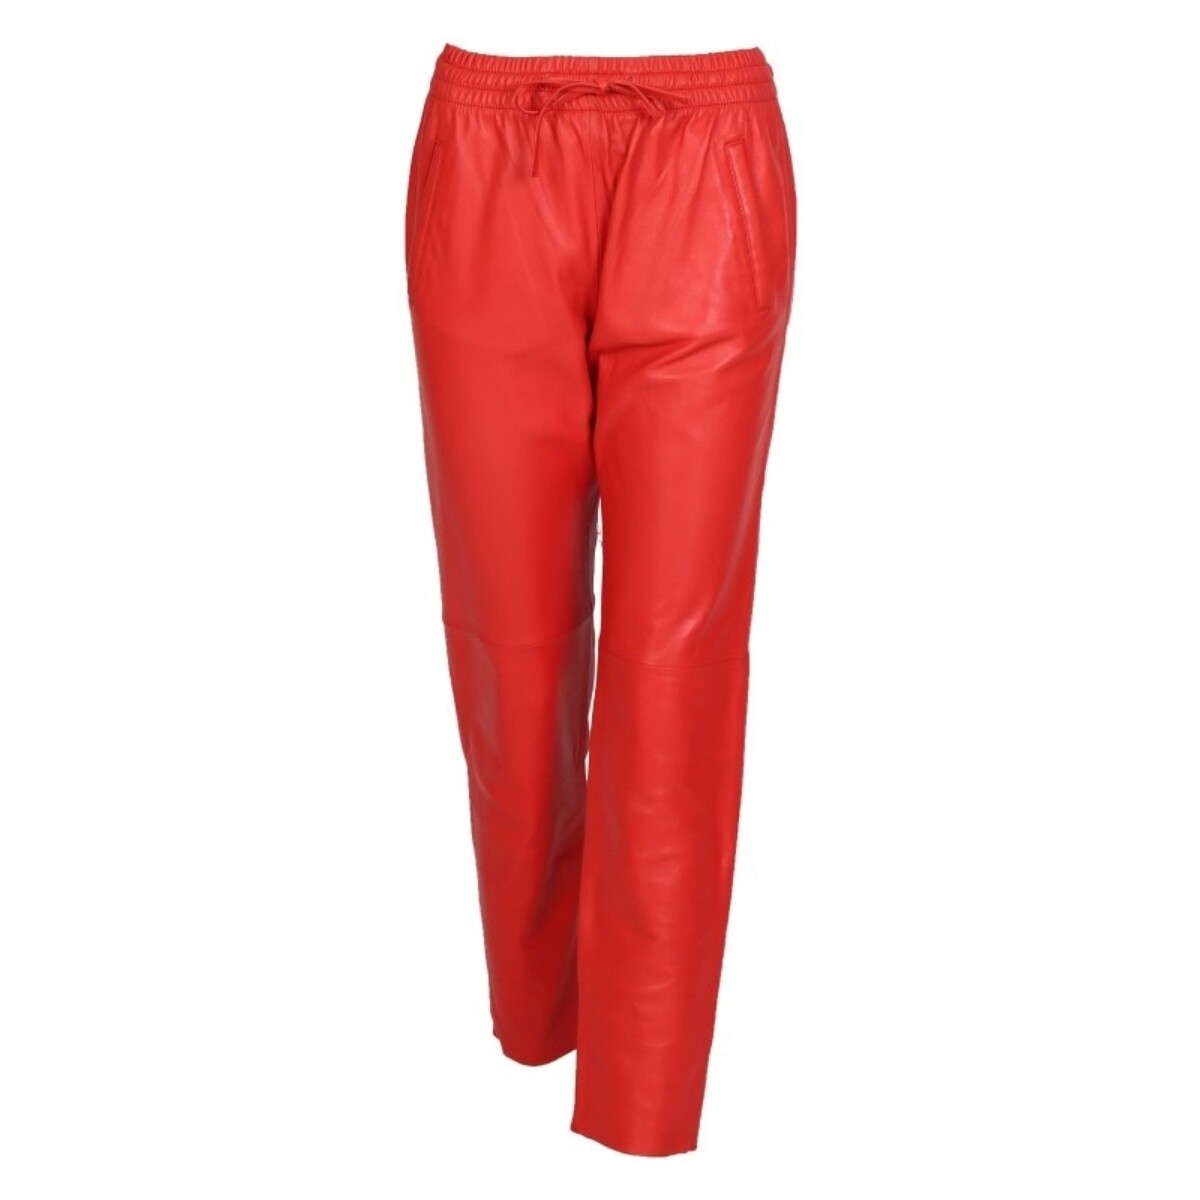 Oakwood Rouge Pantalon jogpant en cuir Gift Ref 50426 Rouge Fonce FcfkGux9